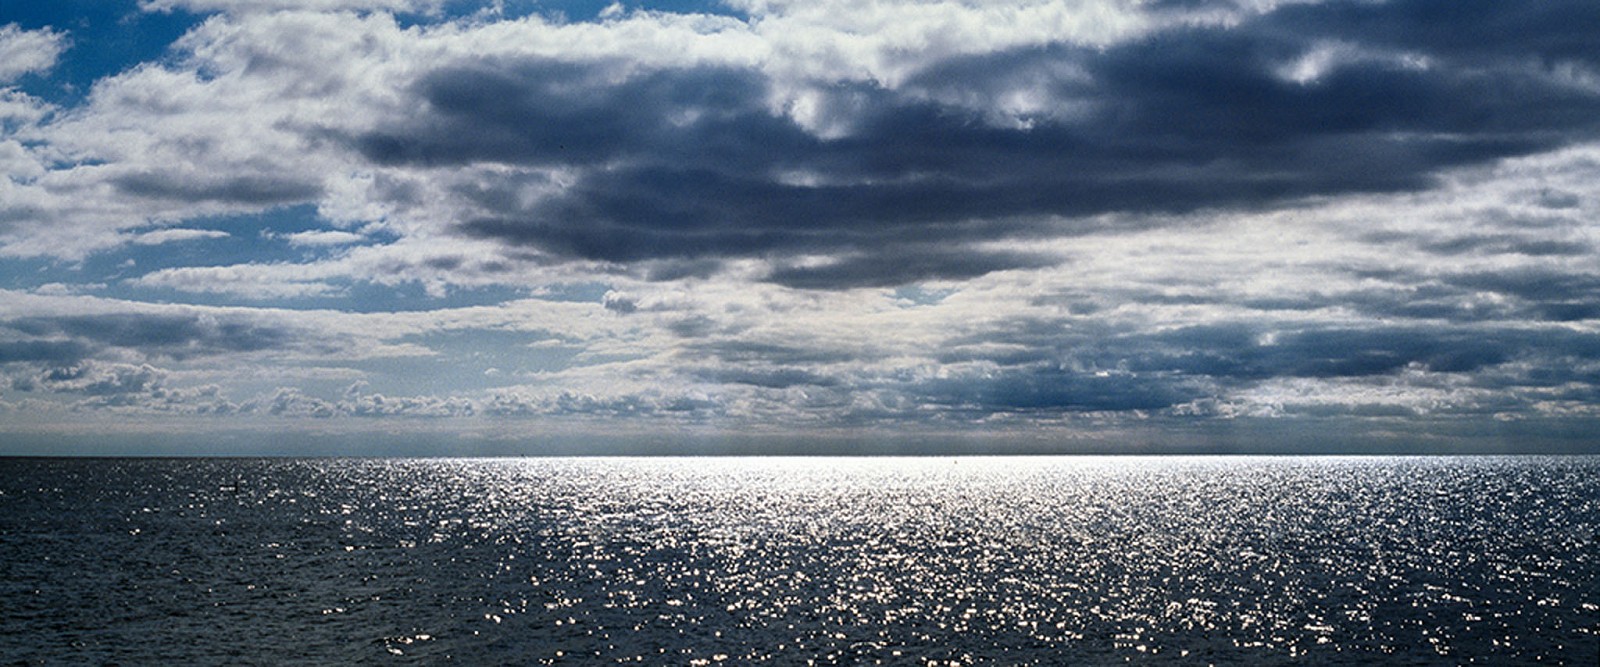 David Drebin, The End, 2008
Digital C Print, 20 x 47 inches; 30 x 70 3/10 inches; 40 x 93 3/4 inches